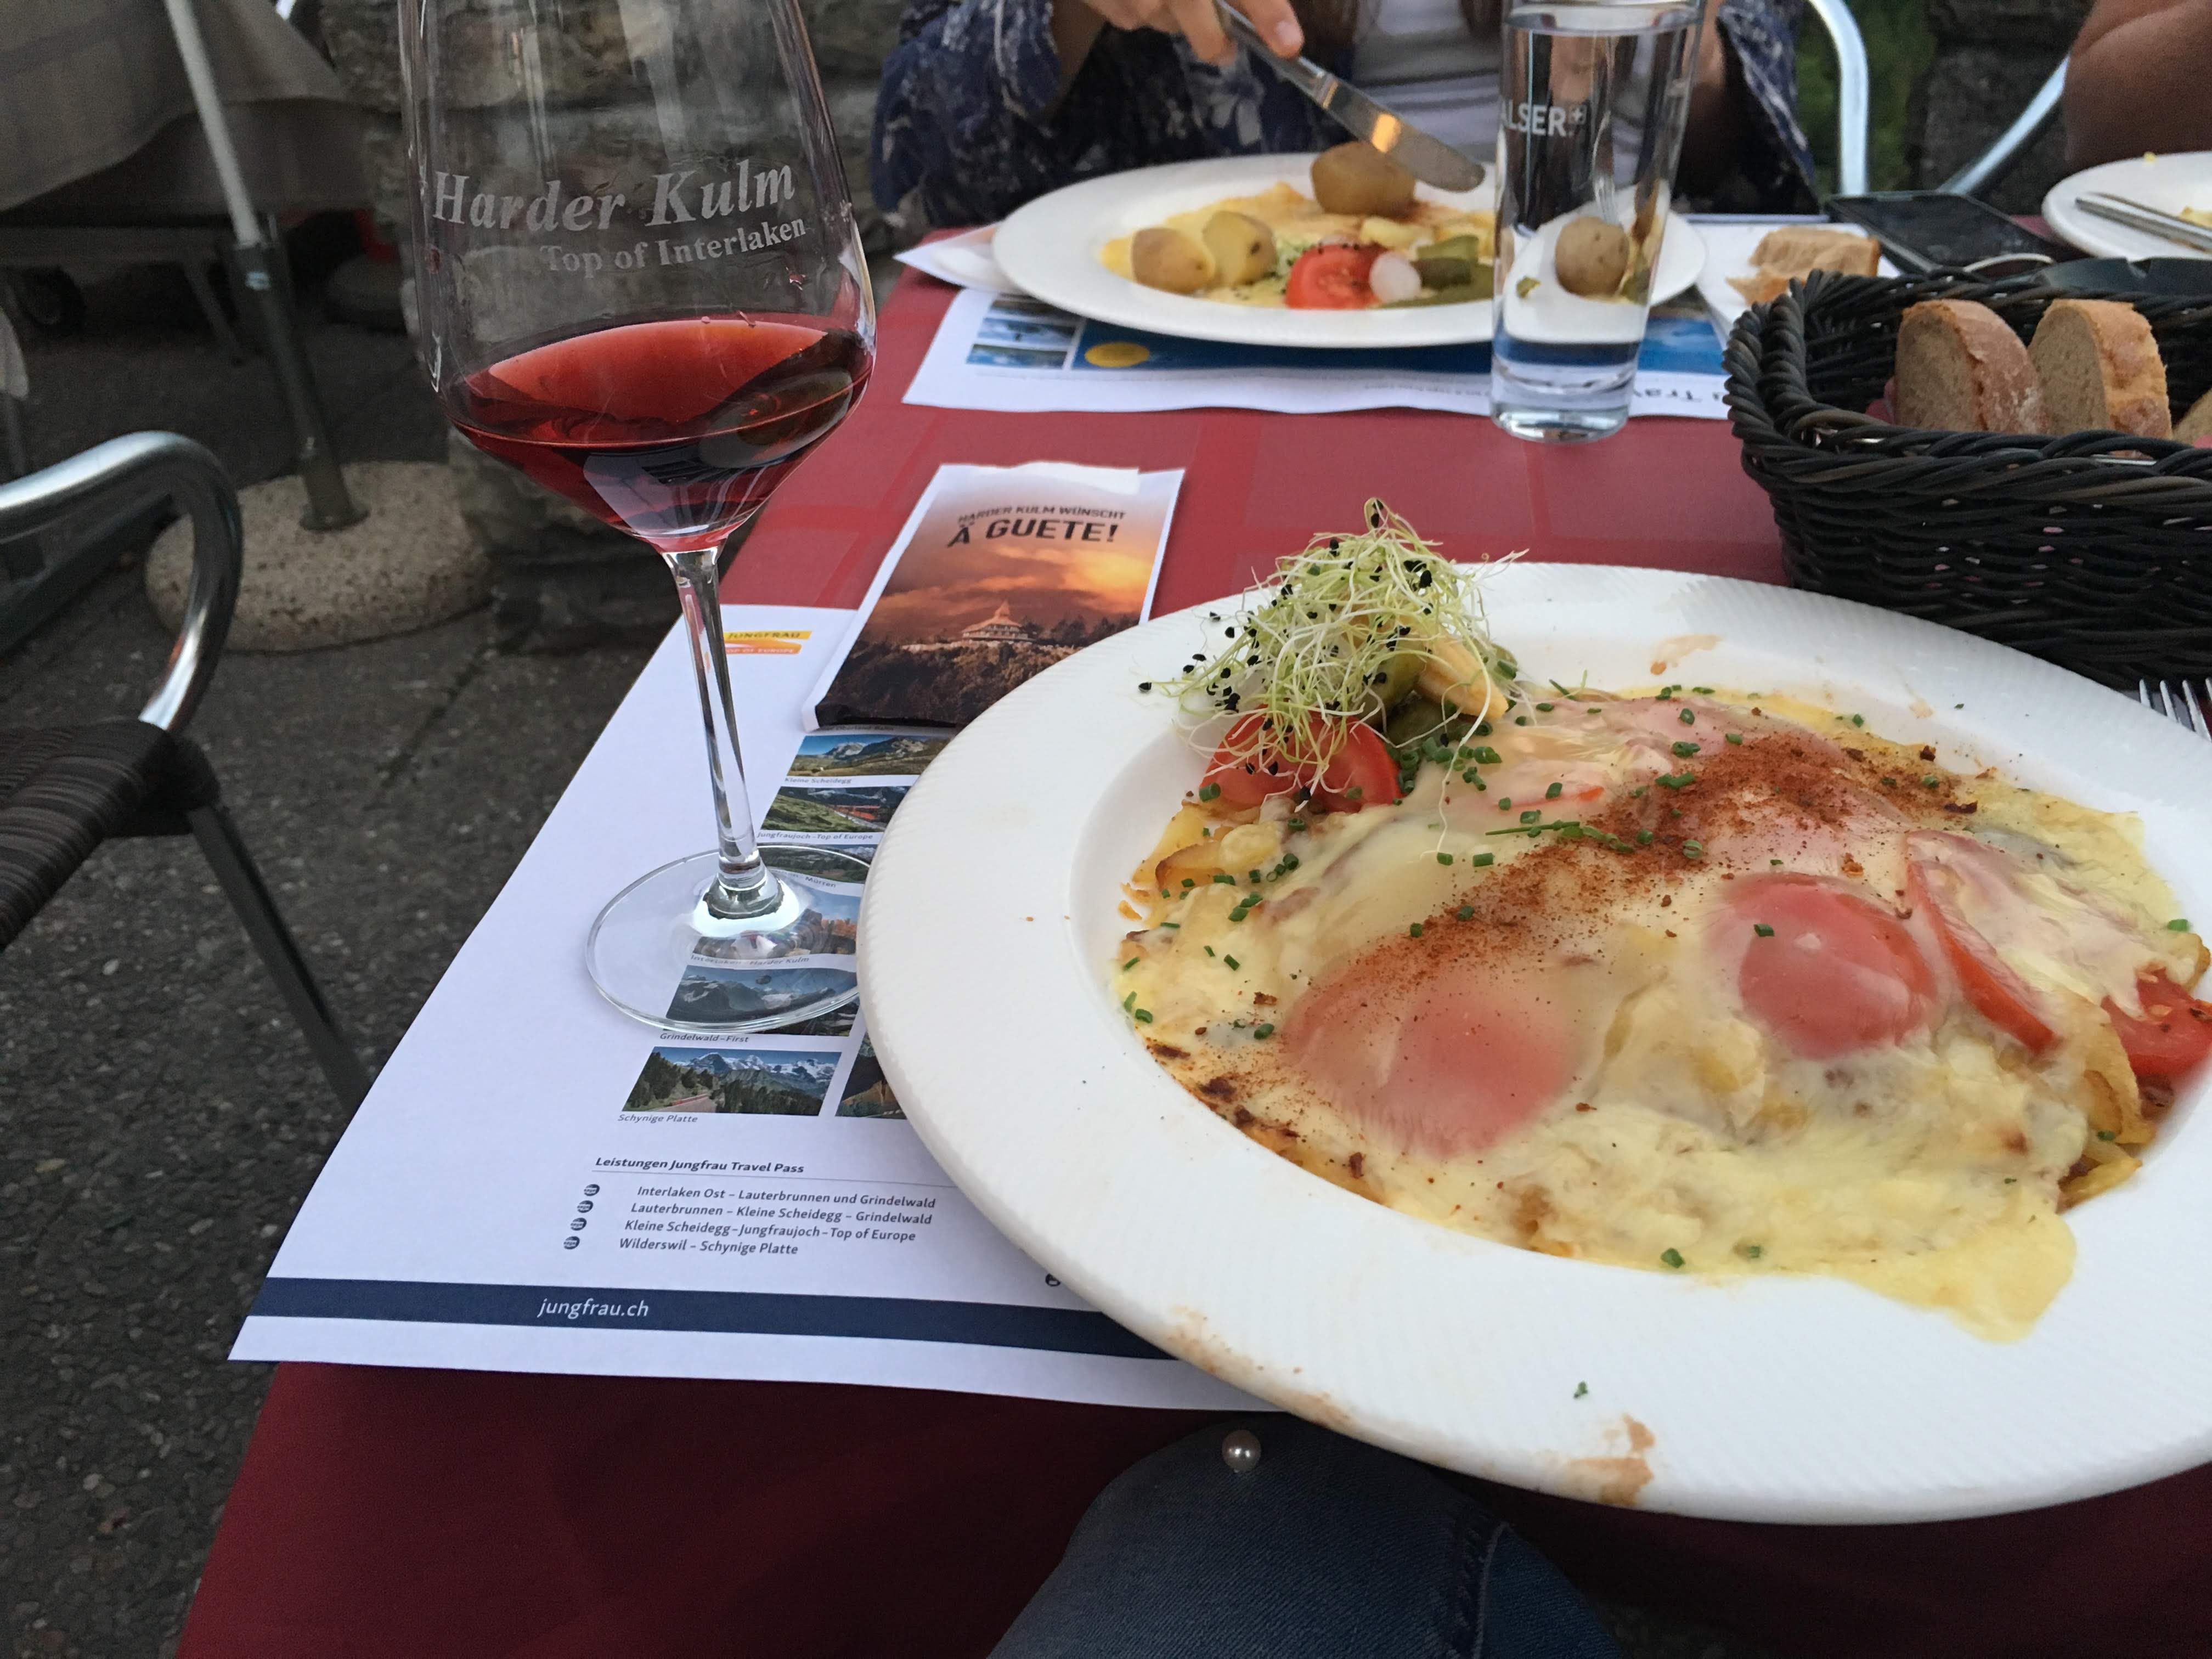 Interlaken travel - swiss cheese patato dish - travel addict hack